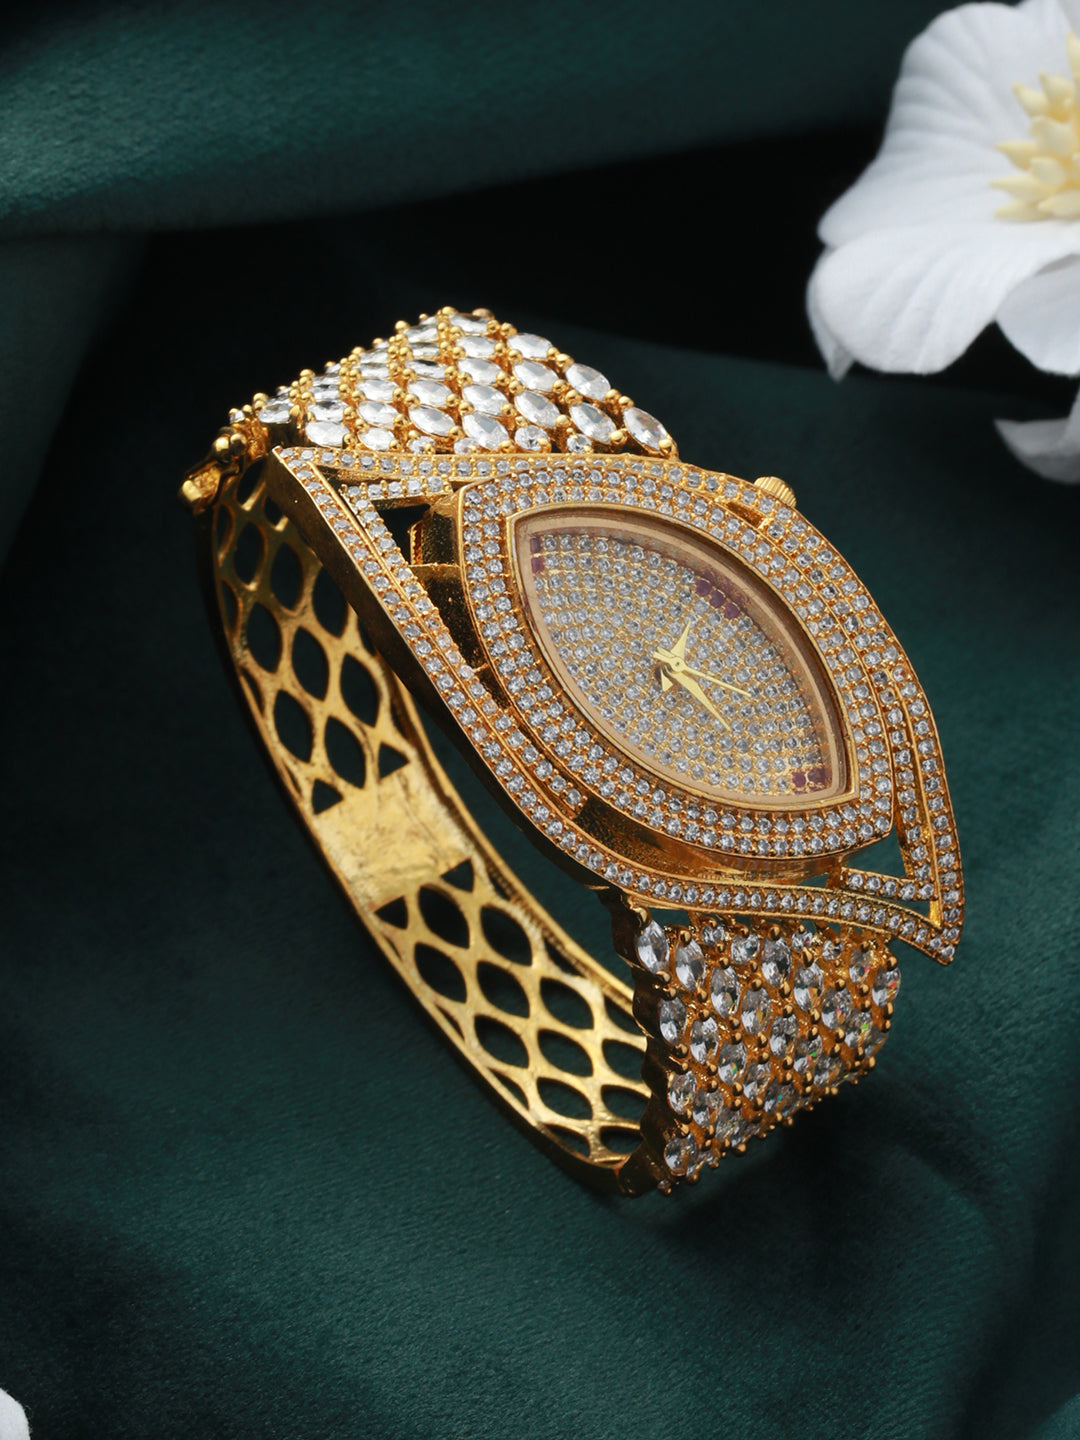 Buy Multicoloured Bracelets  Bangles for Women by Jewels galaxy Online   Ajiocom